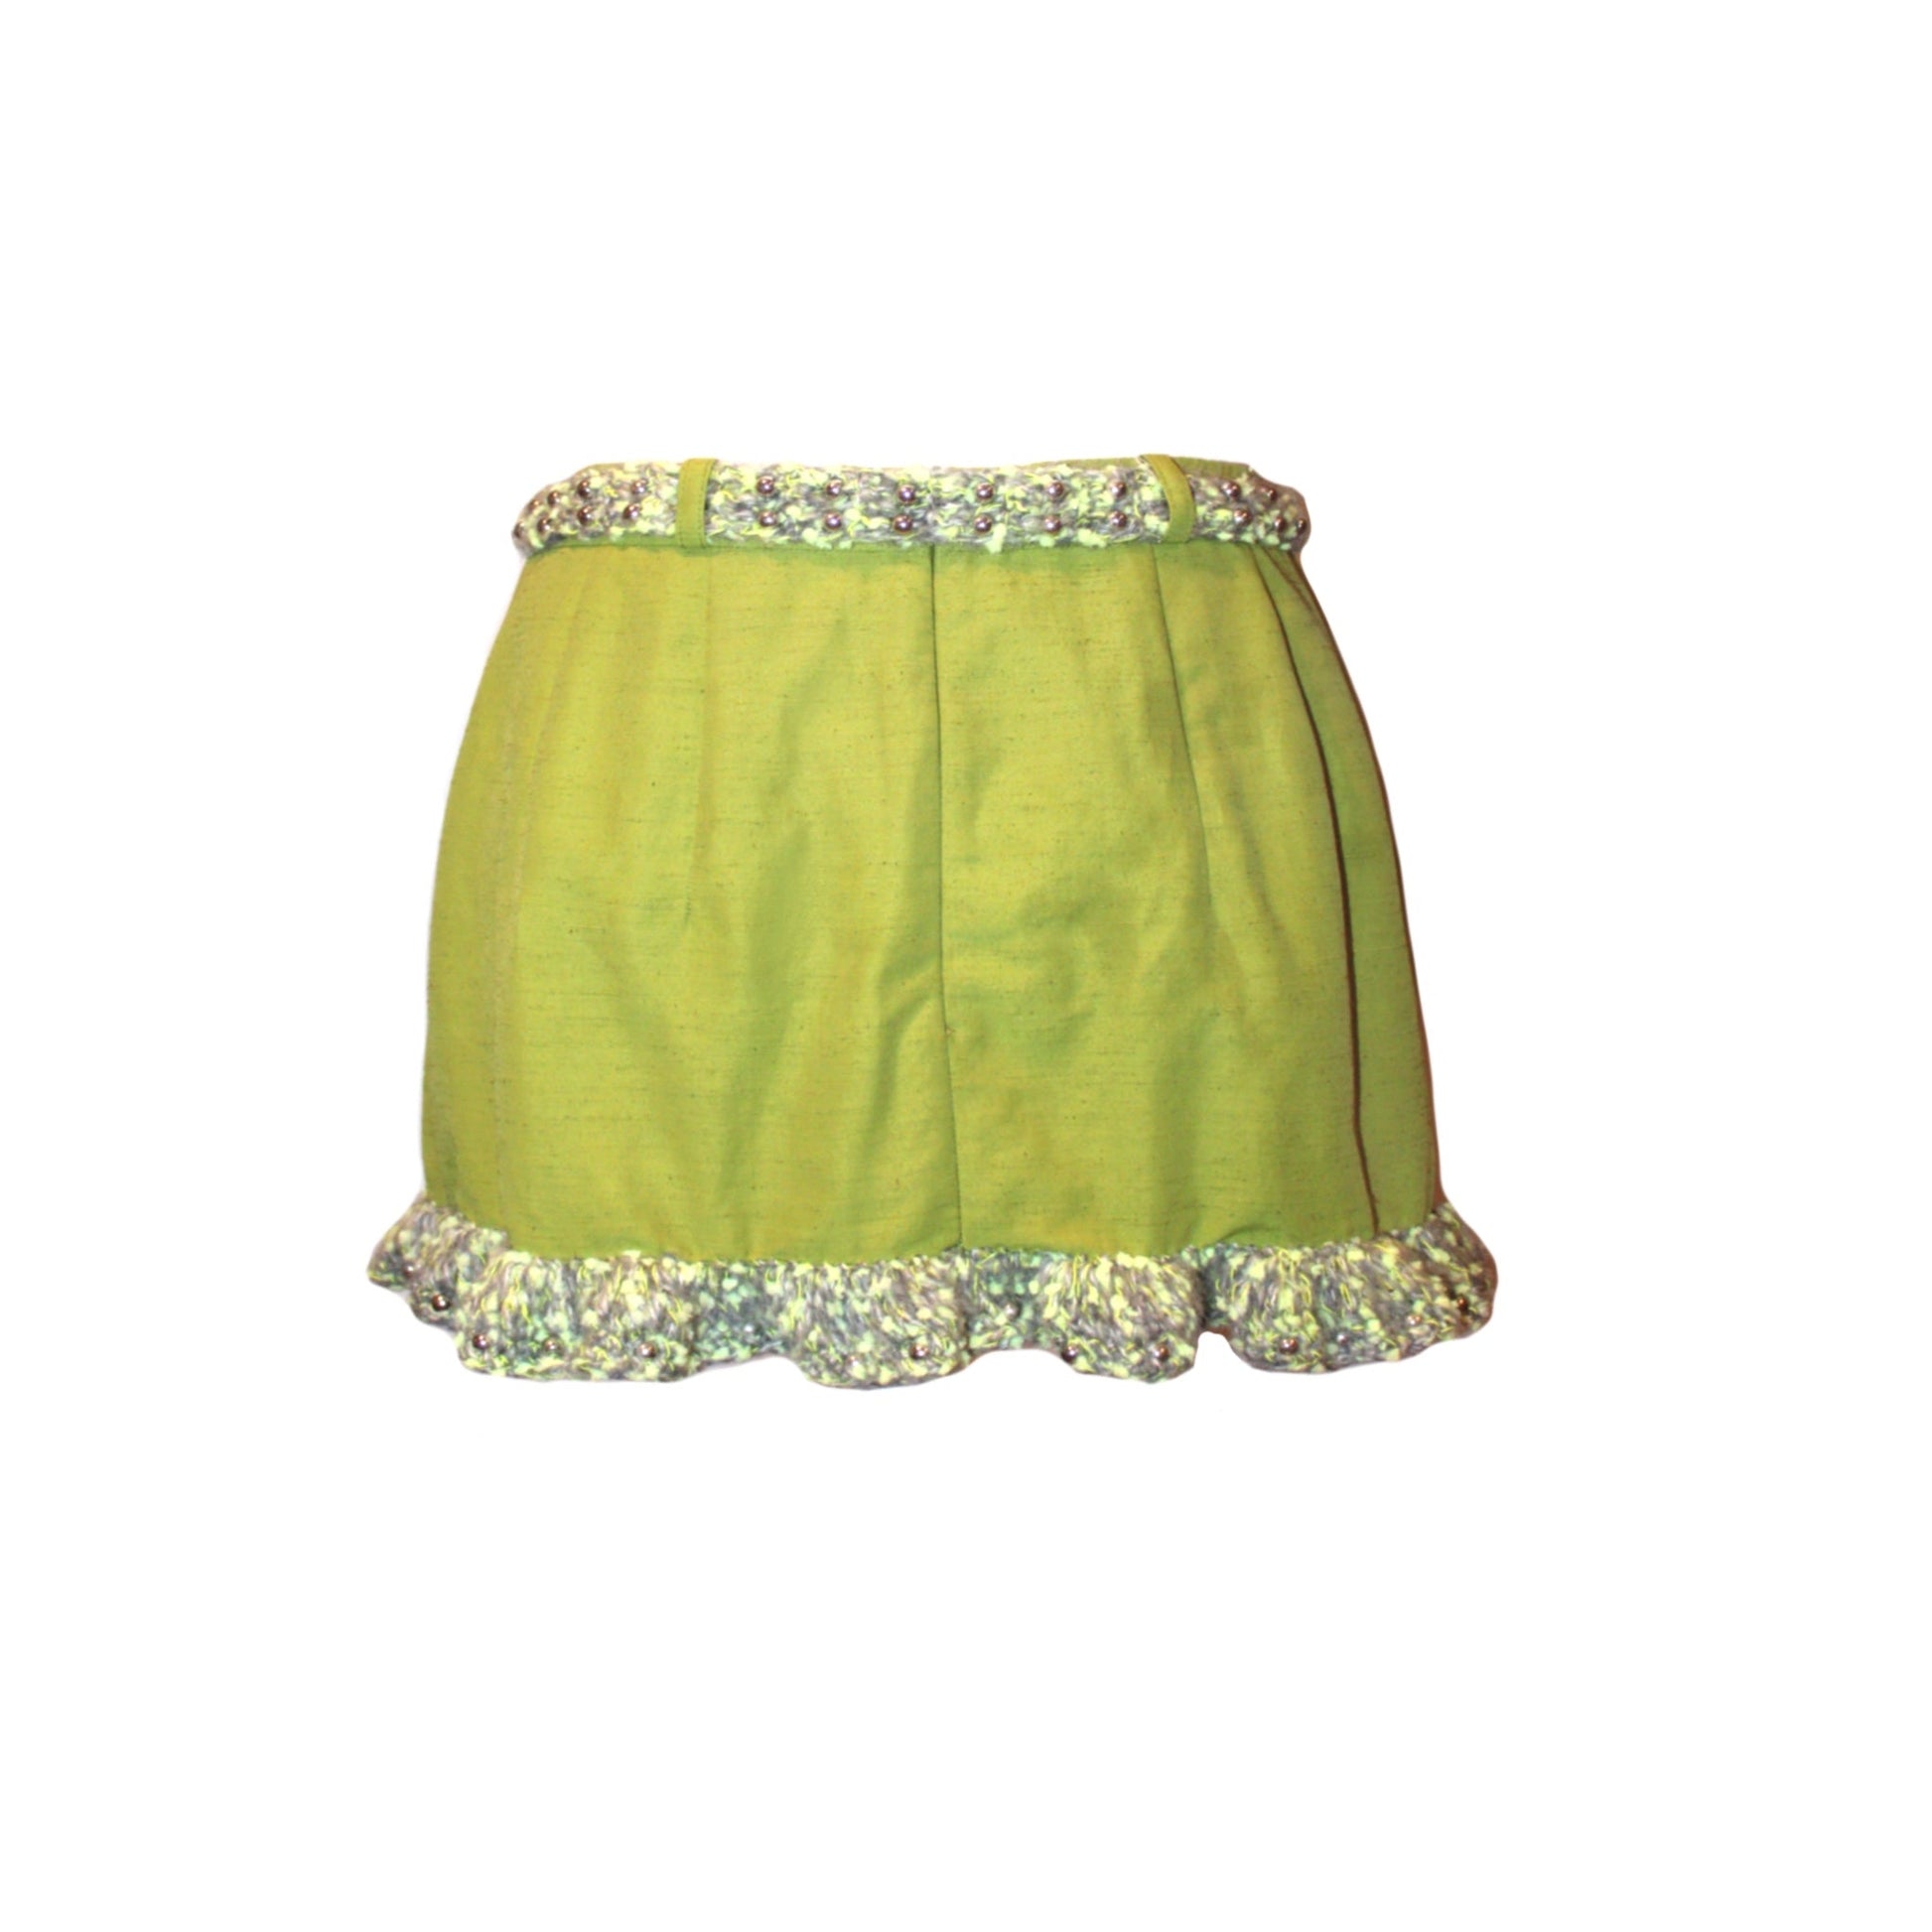 Lime green mini skirt with crochet ruffles and crochet belt.